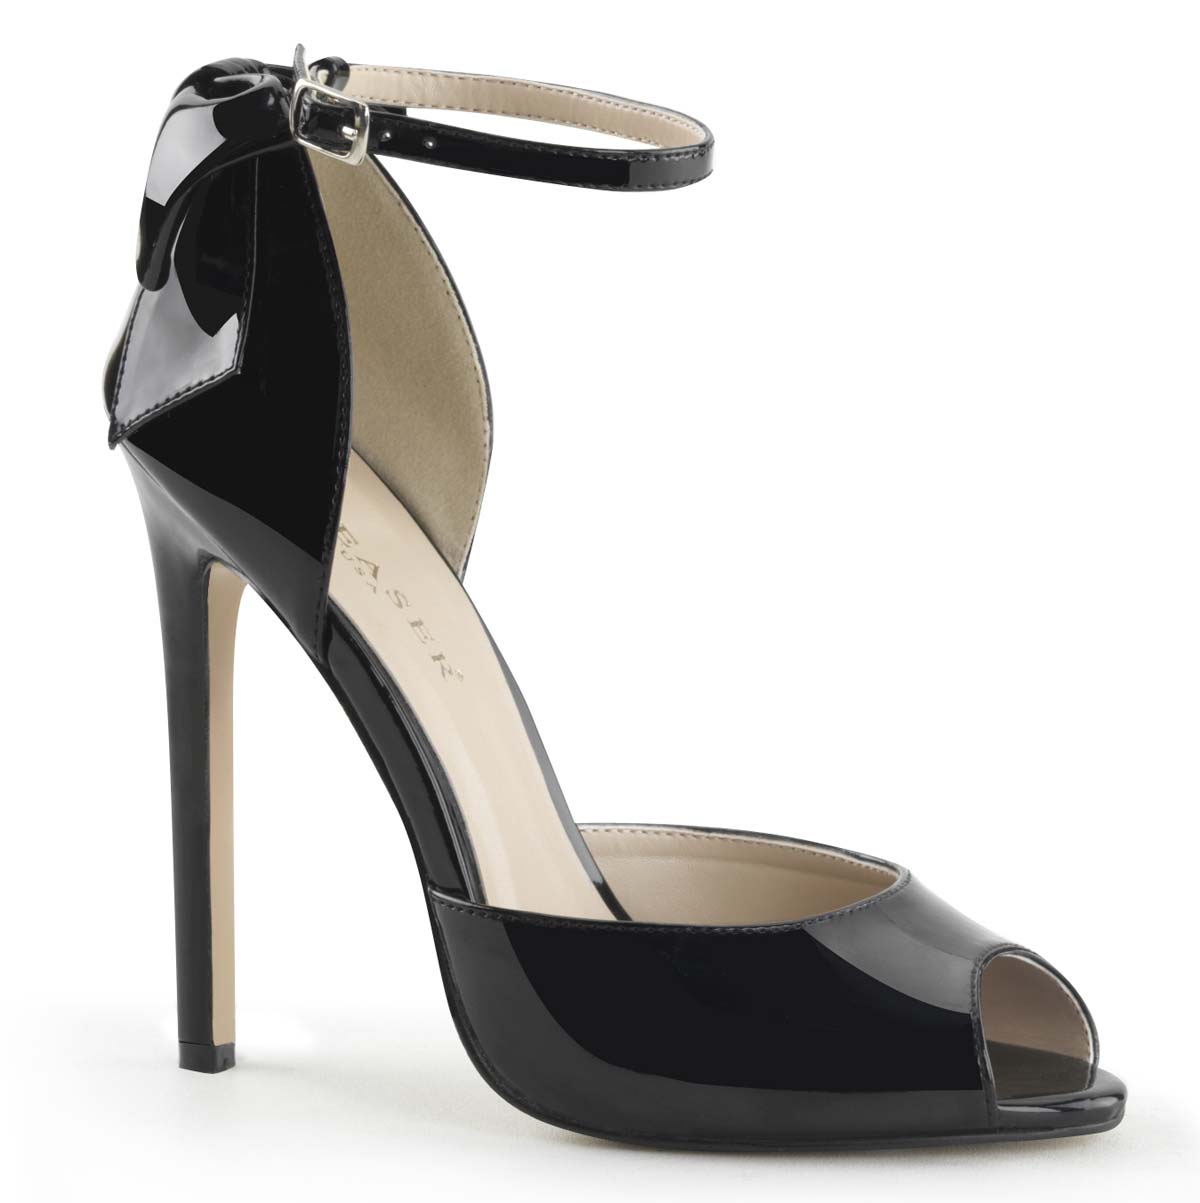 Pleaser SEXY-16 - Black Patent in Sexy Heels & Platforms - $36.95